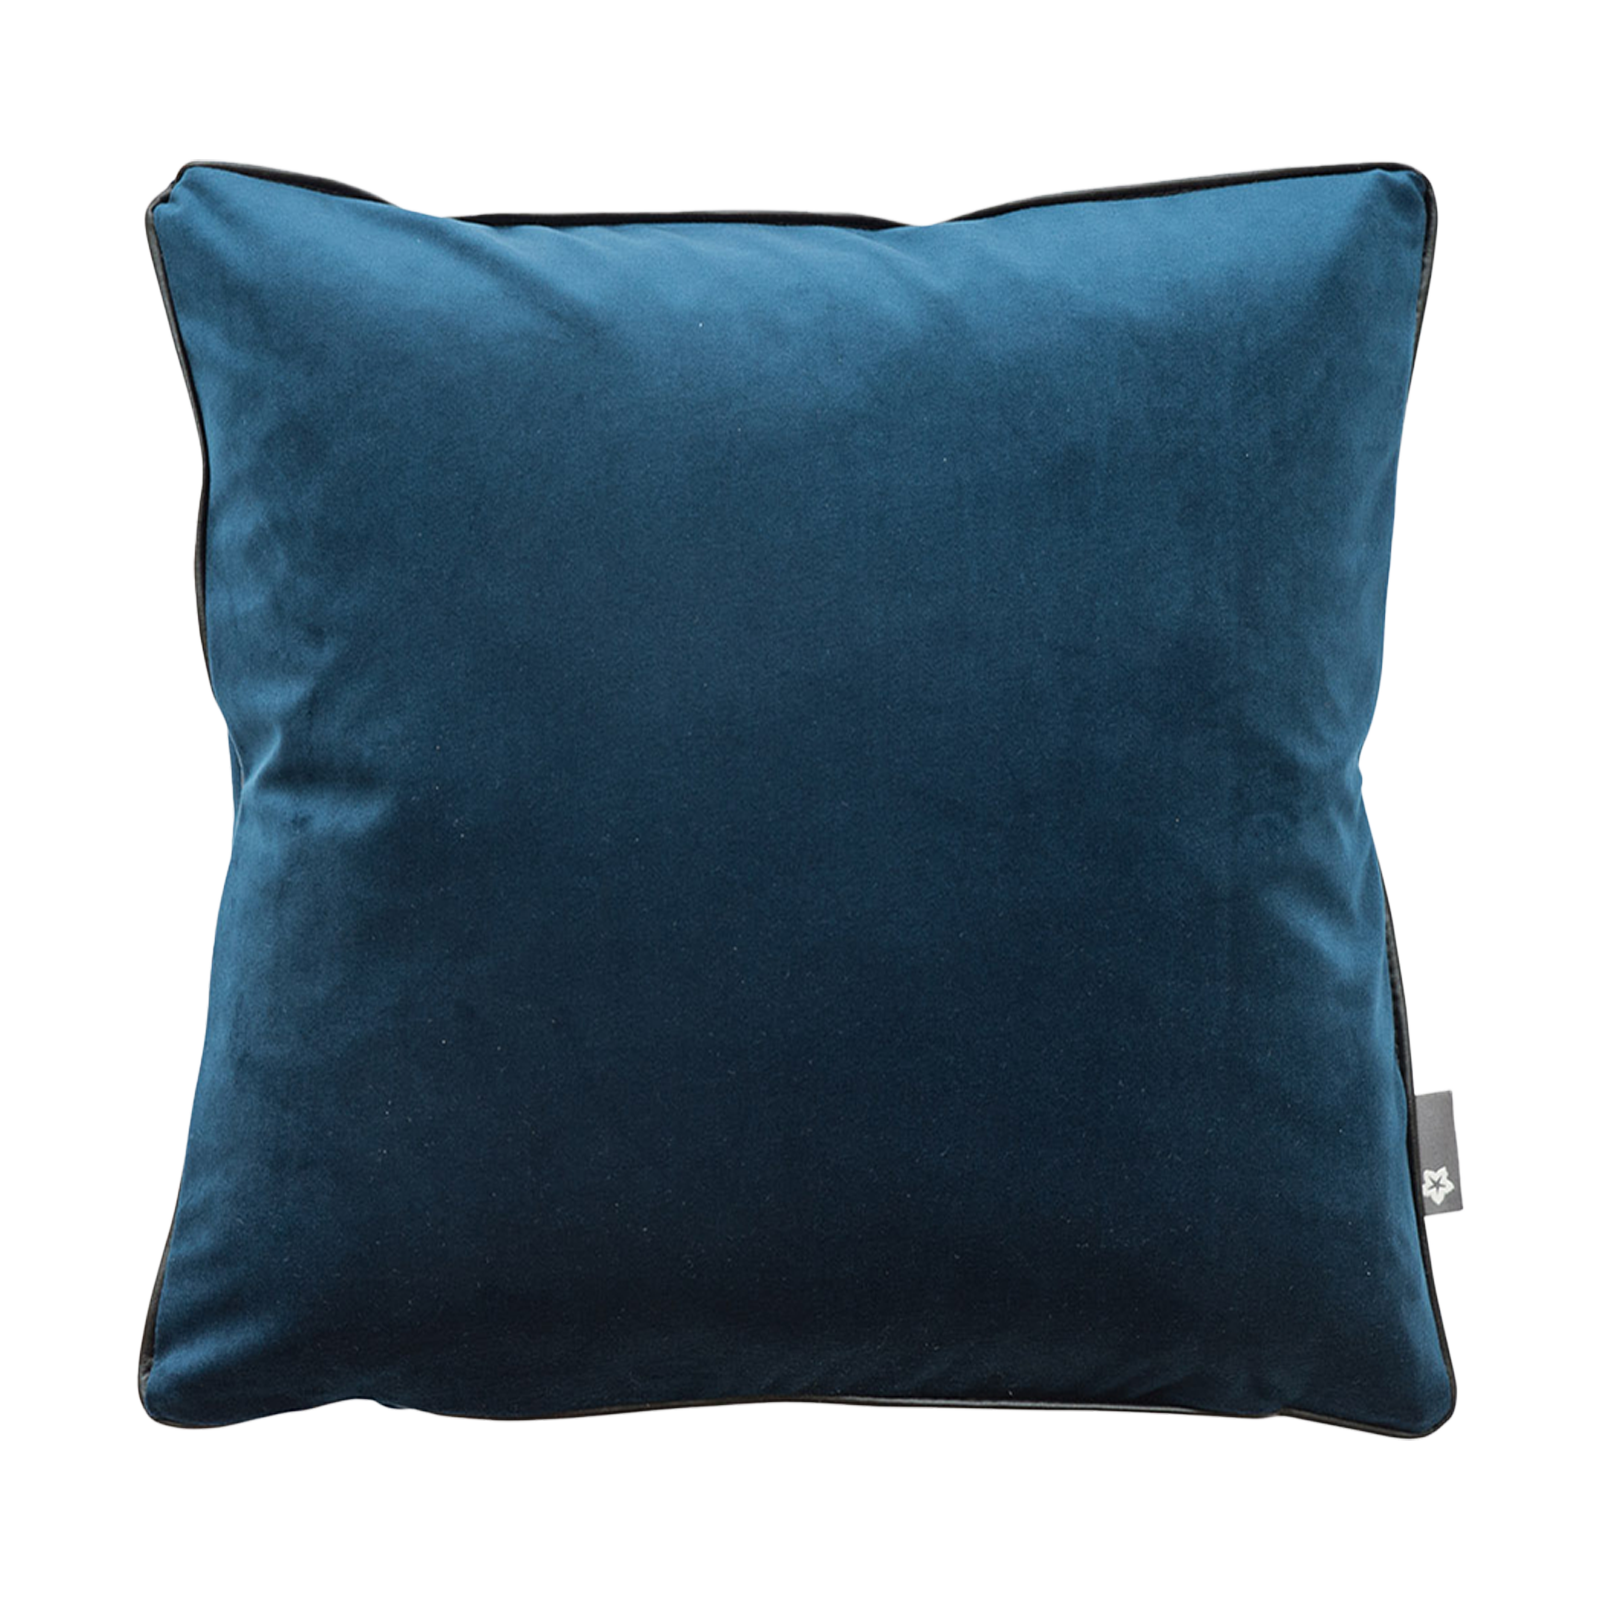 Größe: 51x 51 cm Farbe: nachtblau #farbe_nachtblau